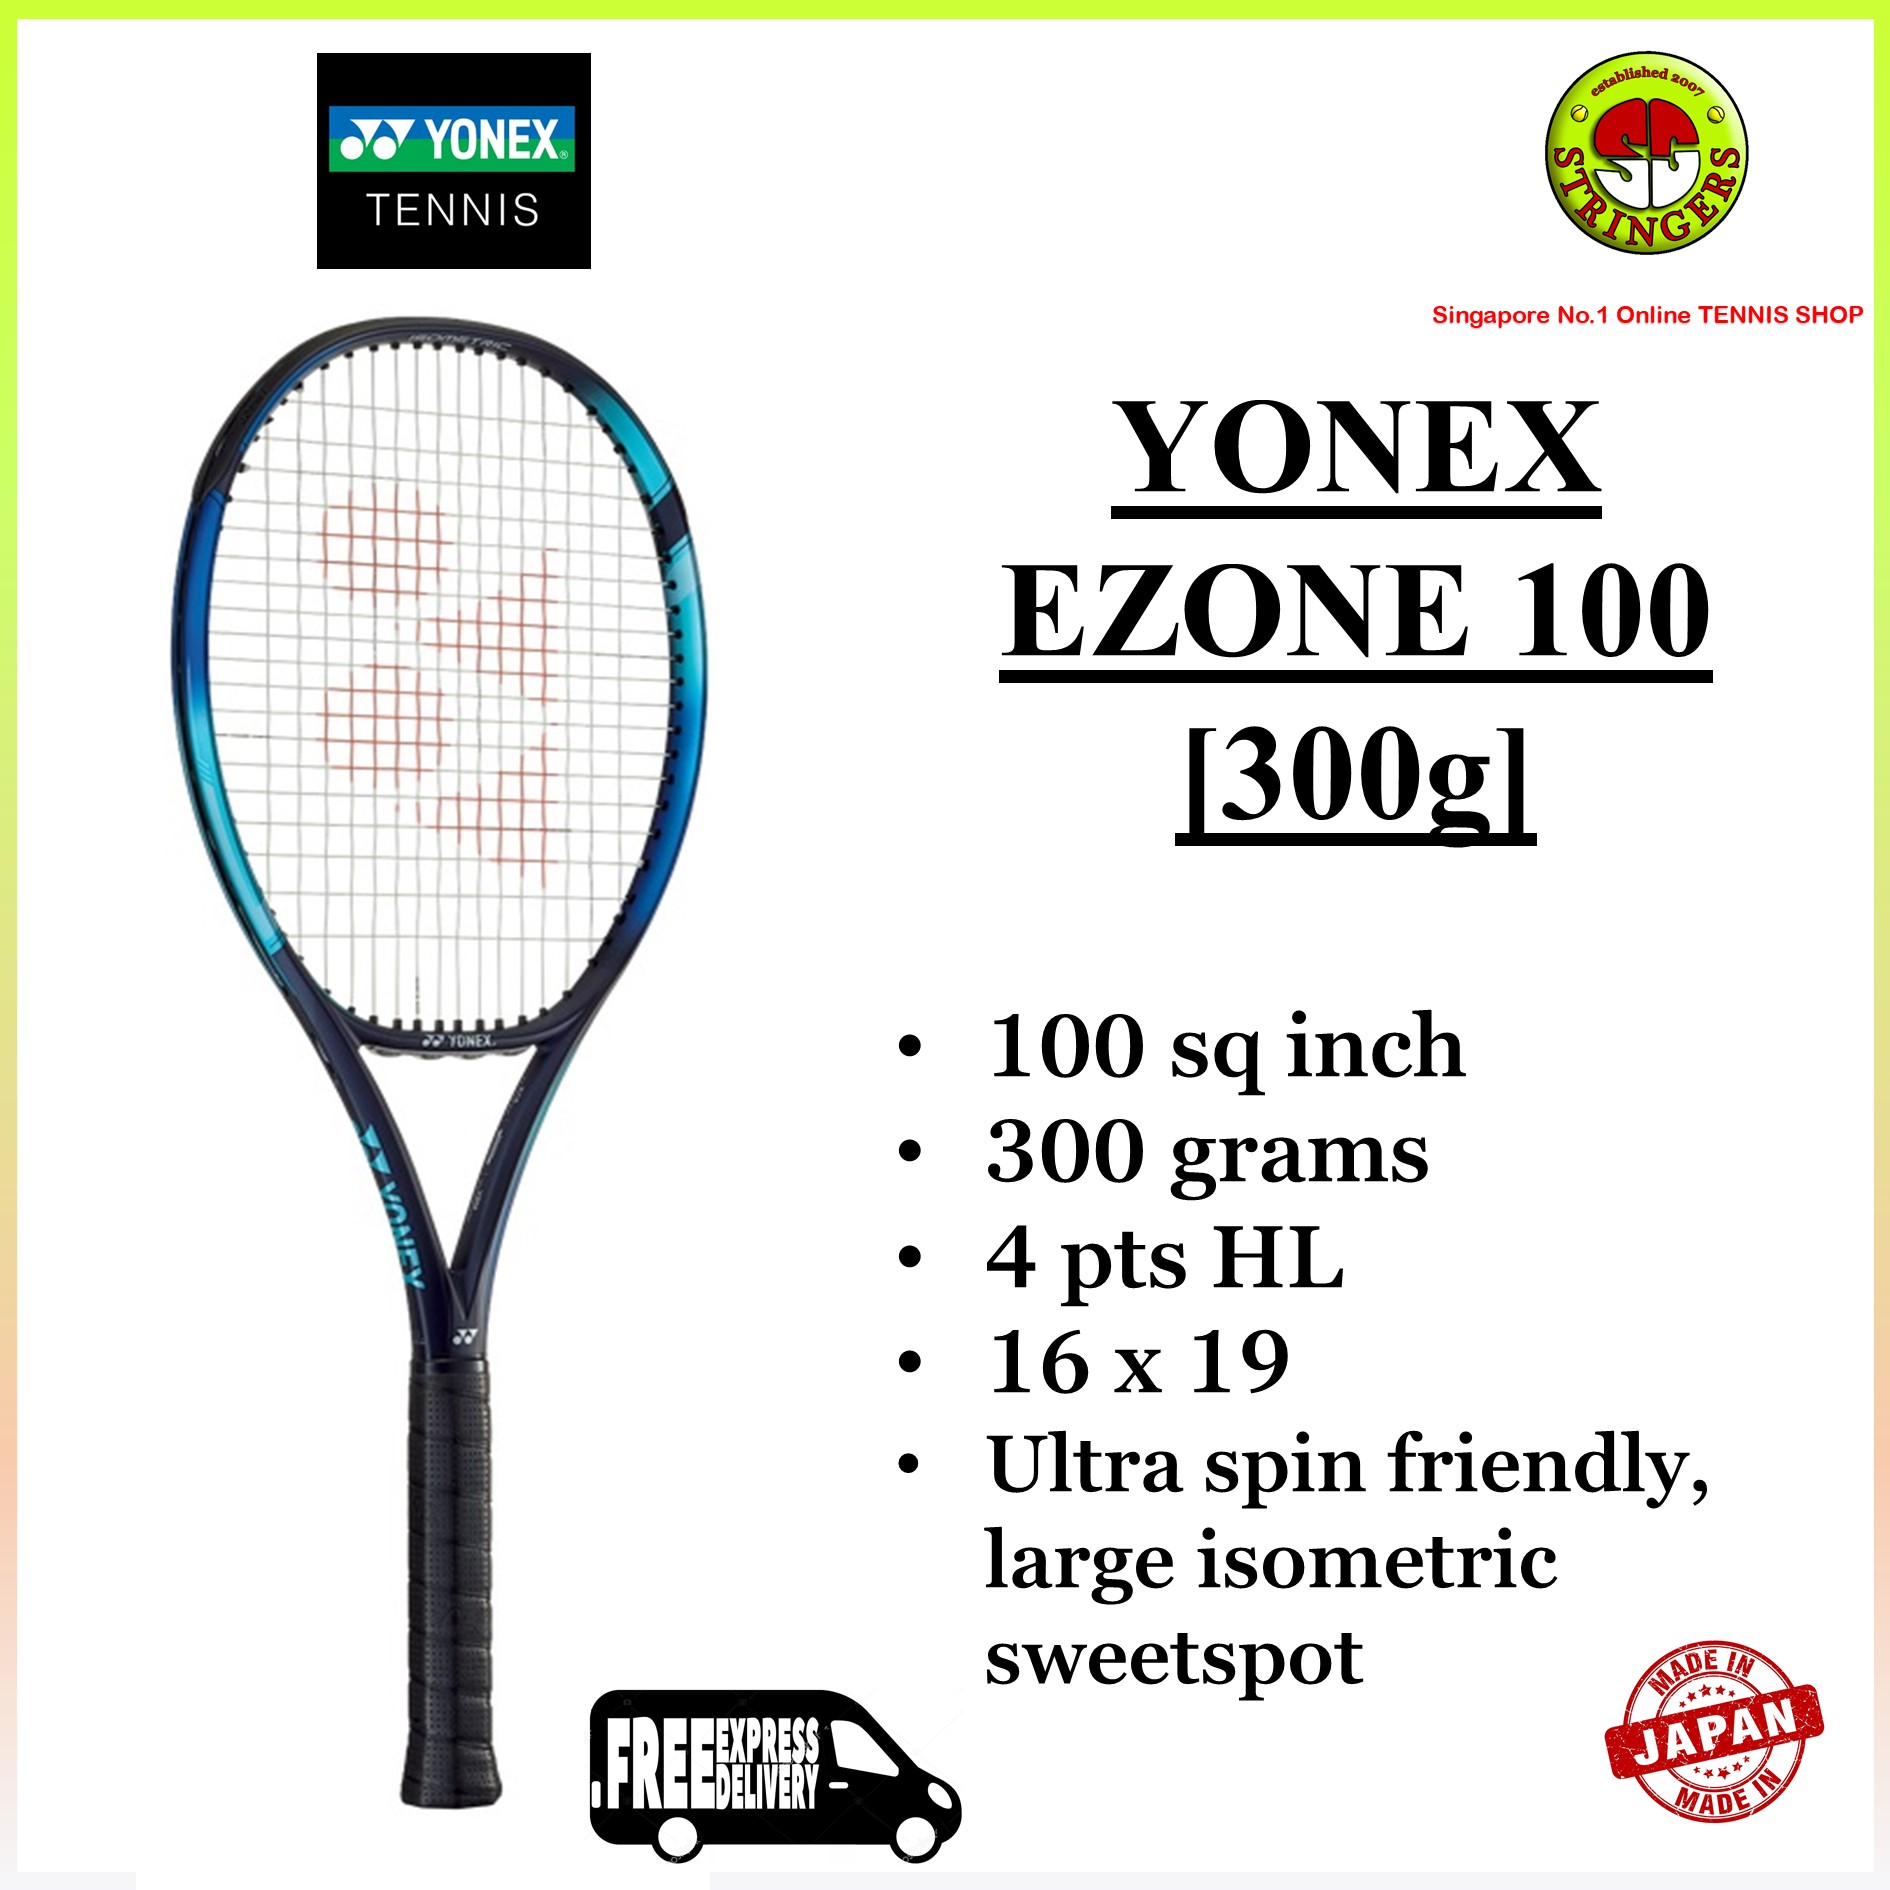 Yonex Ezone 100 [300g] 2022 Tennis Racket | Lazada Singapore